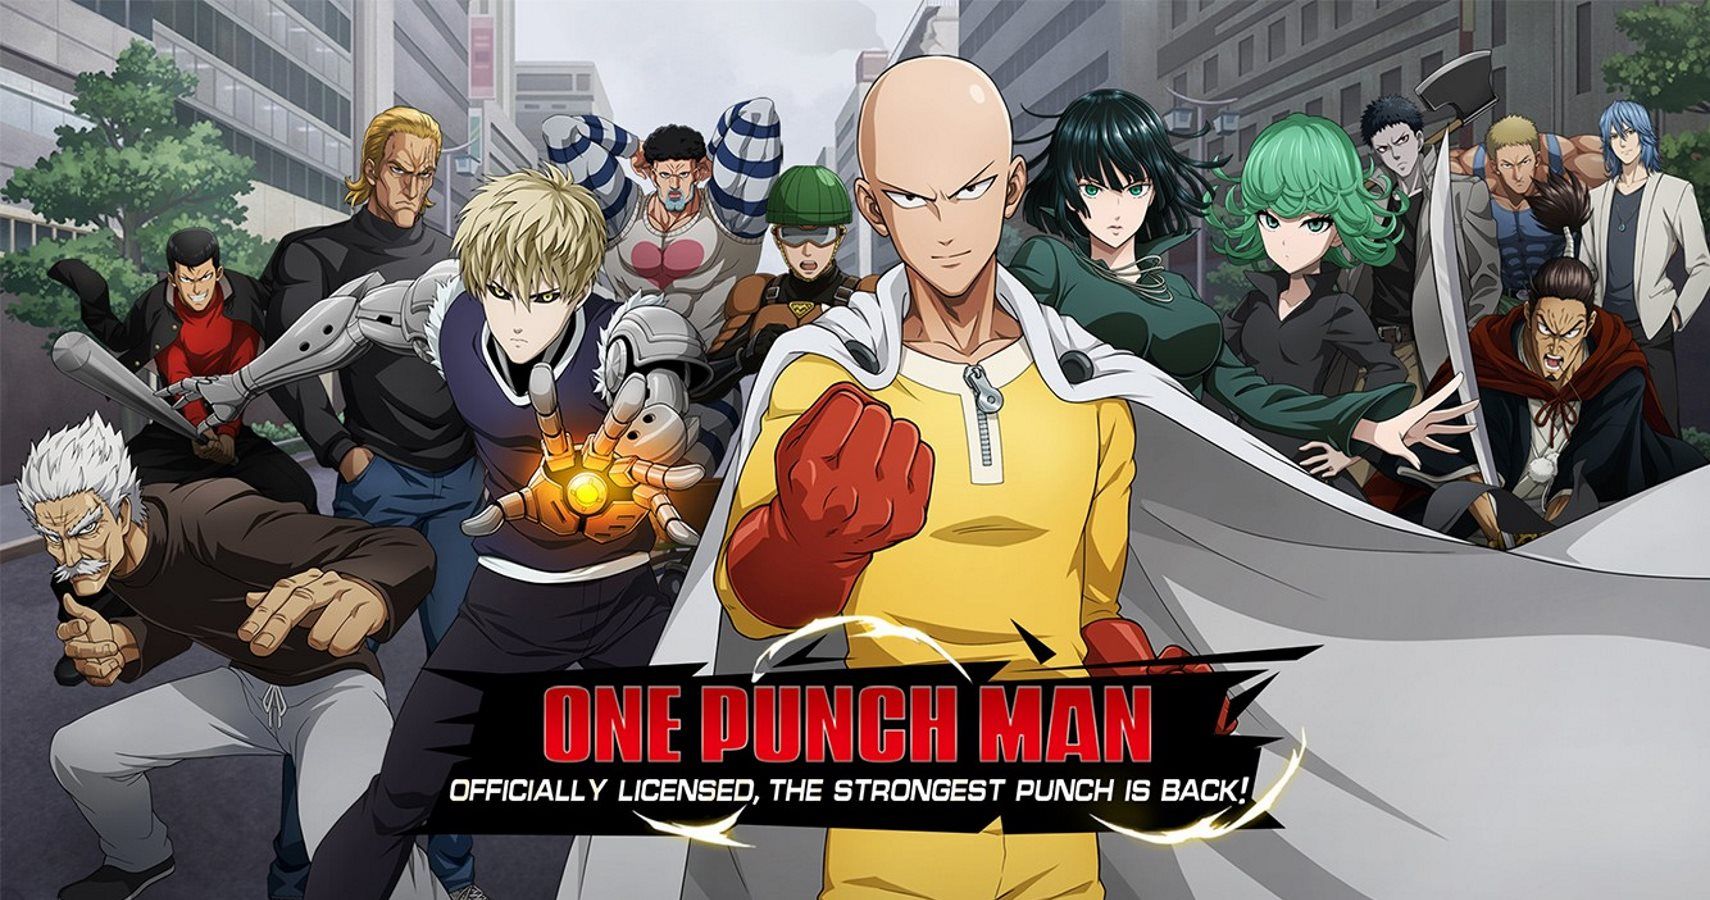 One-Punch Man: Road to Hero (@GameOnepunchman) / X